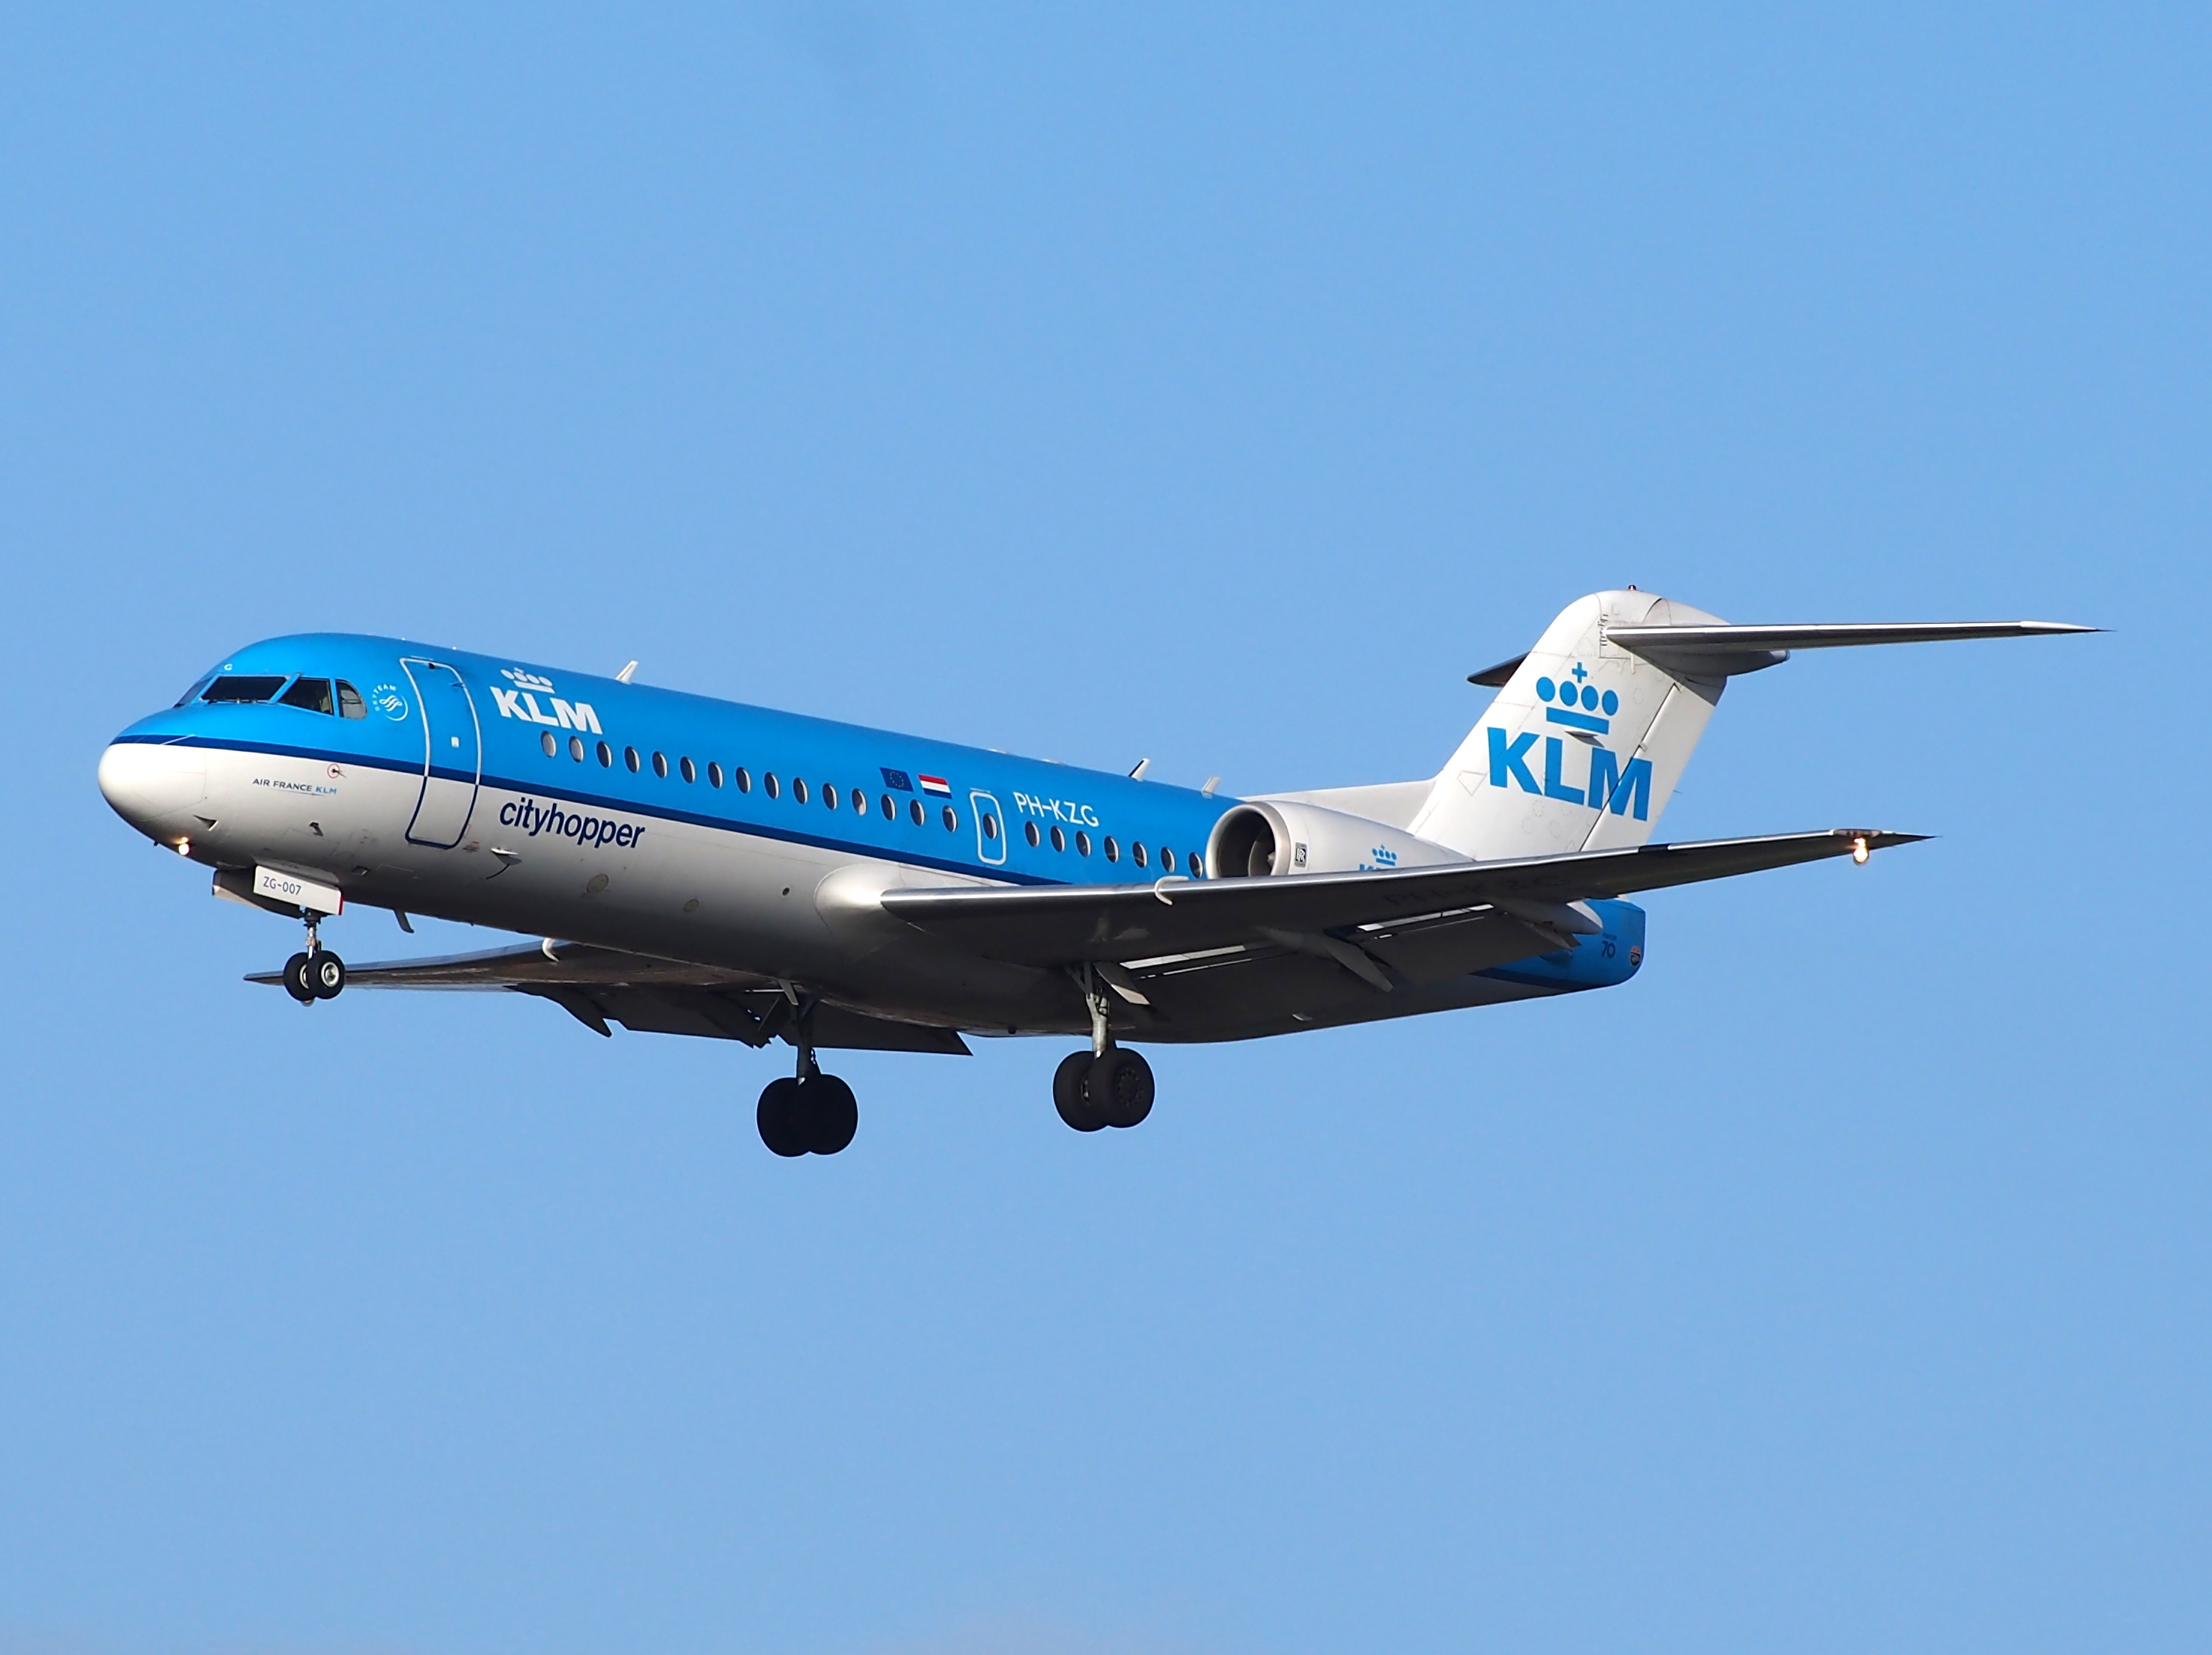 PH-KZG, landing at Schiphol on 2Feb2014 pic16